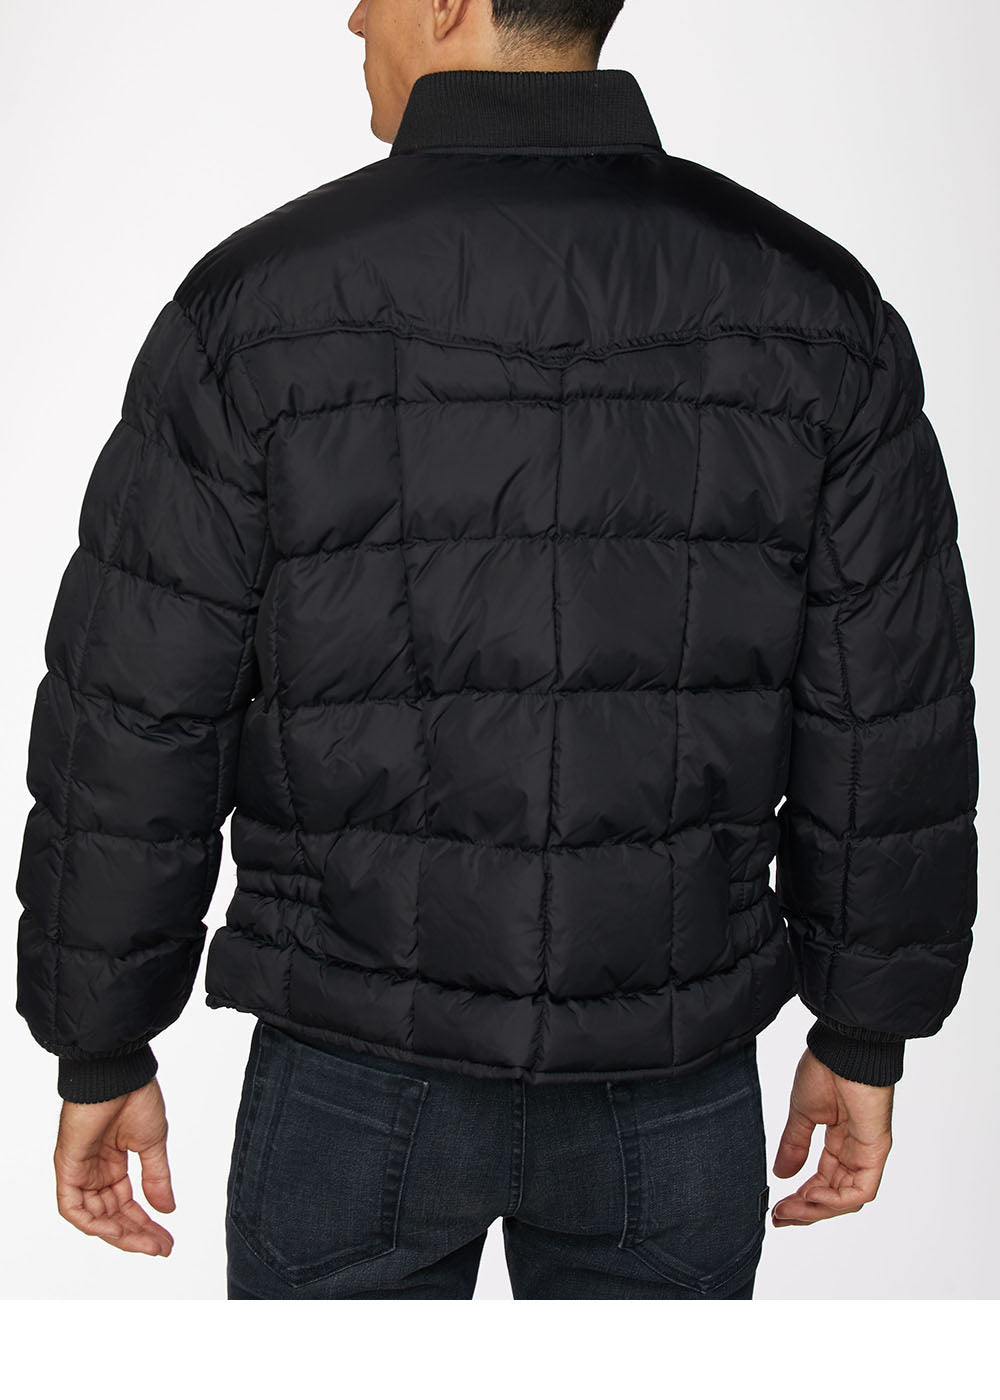 Men's Nylon Quilted Puffer Jacket-NJ629-Black